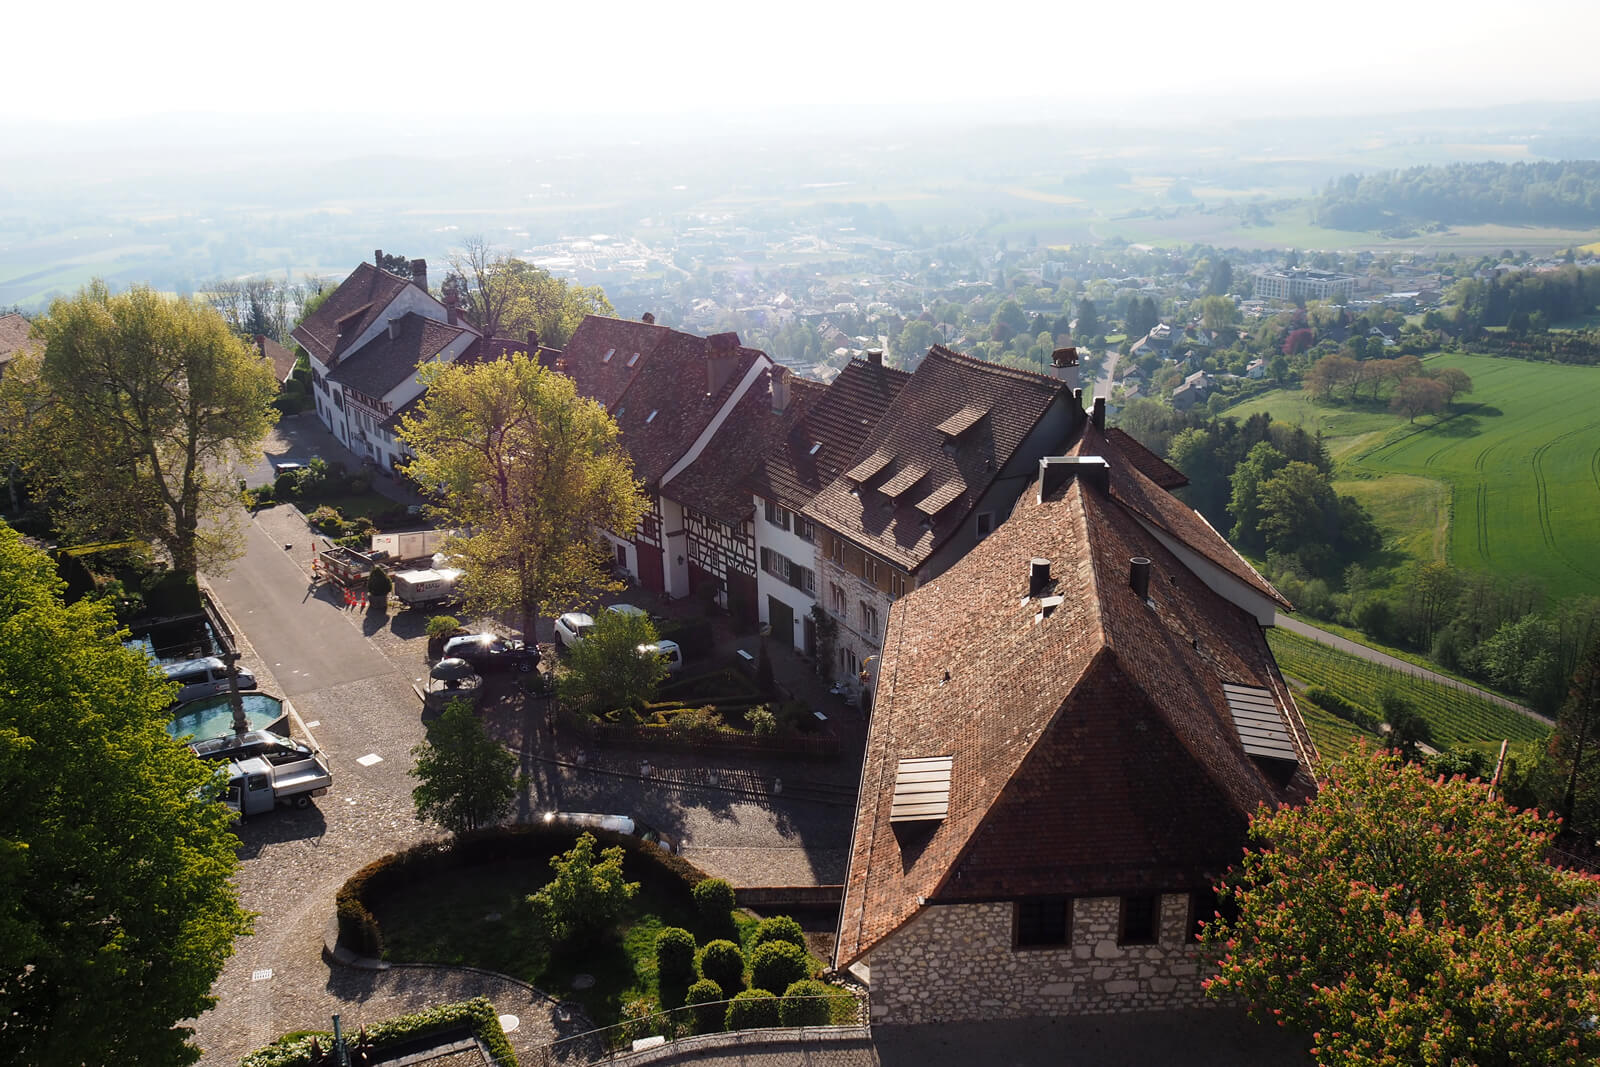 The medieval village of Regensberg in Switzerland